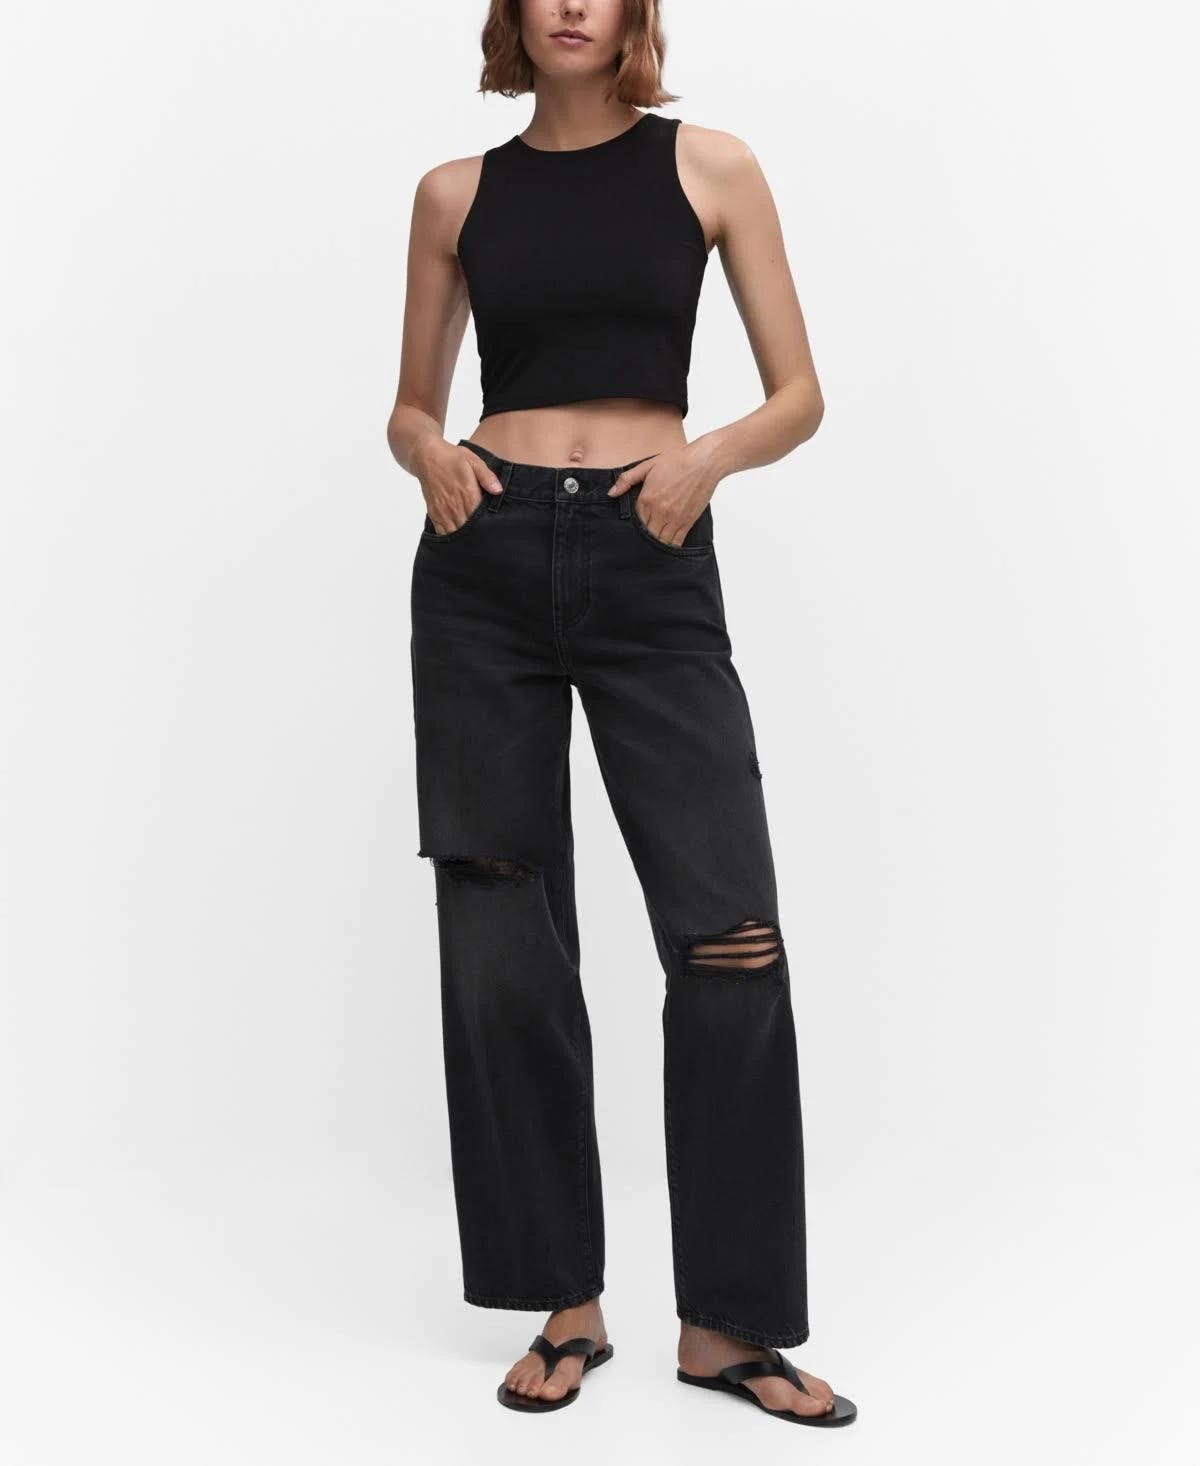 Ripped Wideleg Jeans in Black Denim for Women | Image